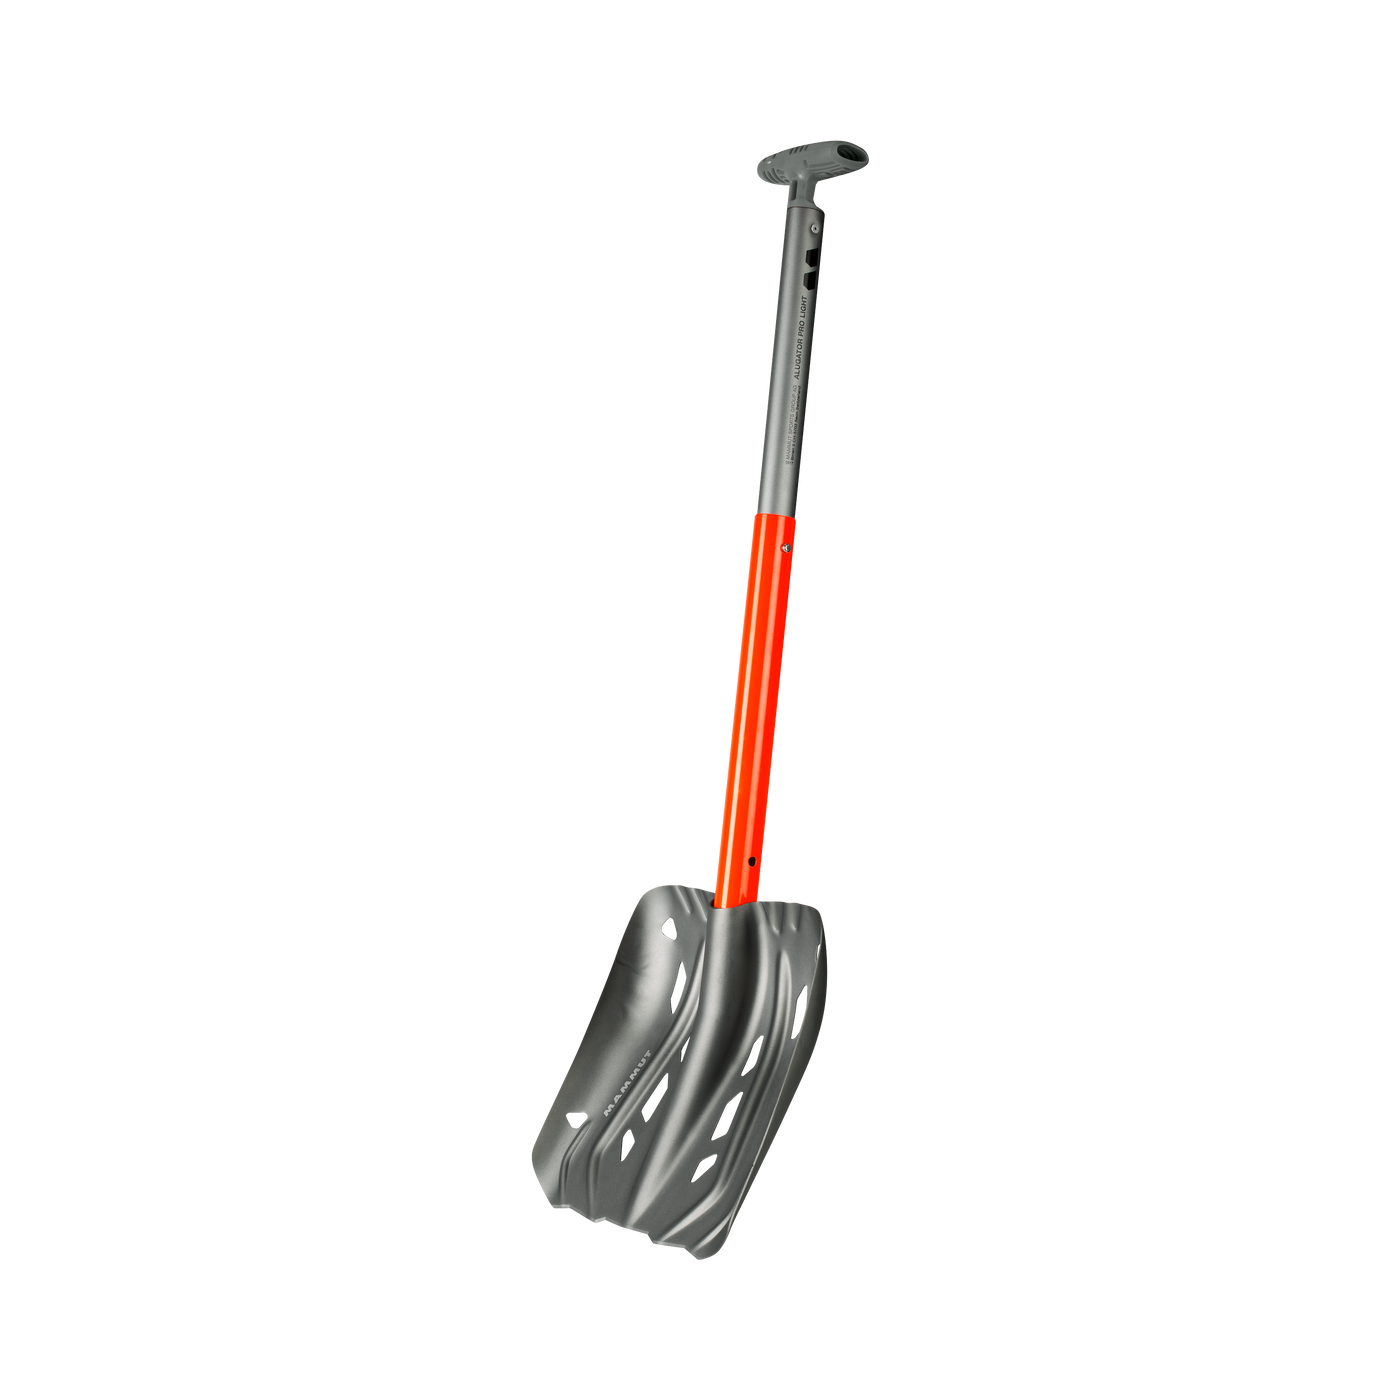 Alugator Pro Light Shovel Neon Orange